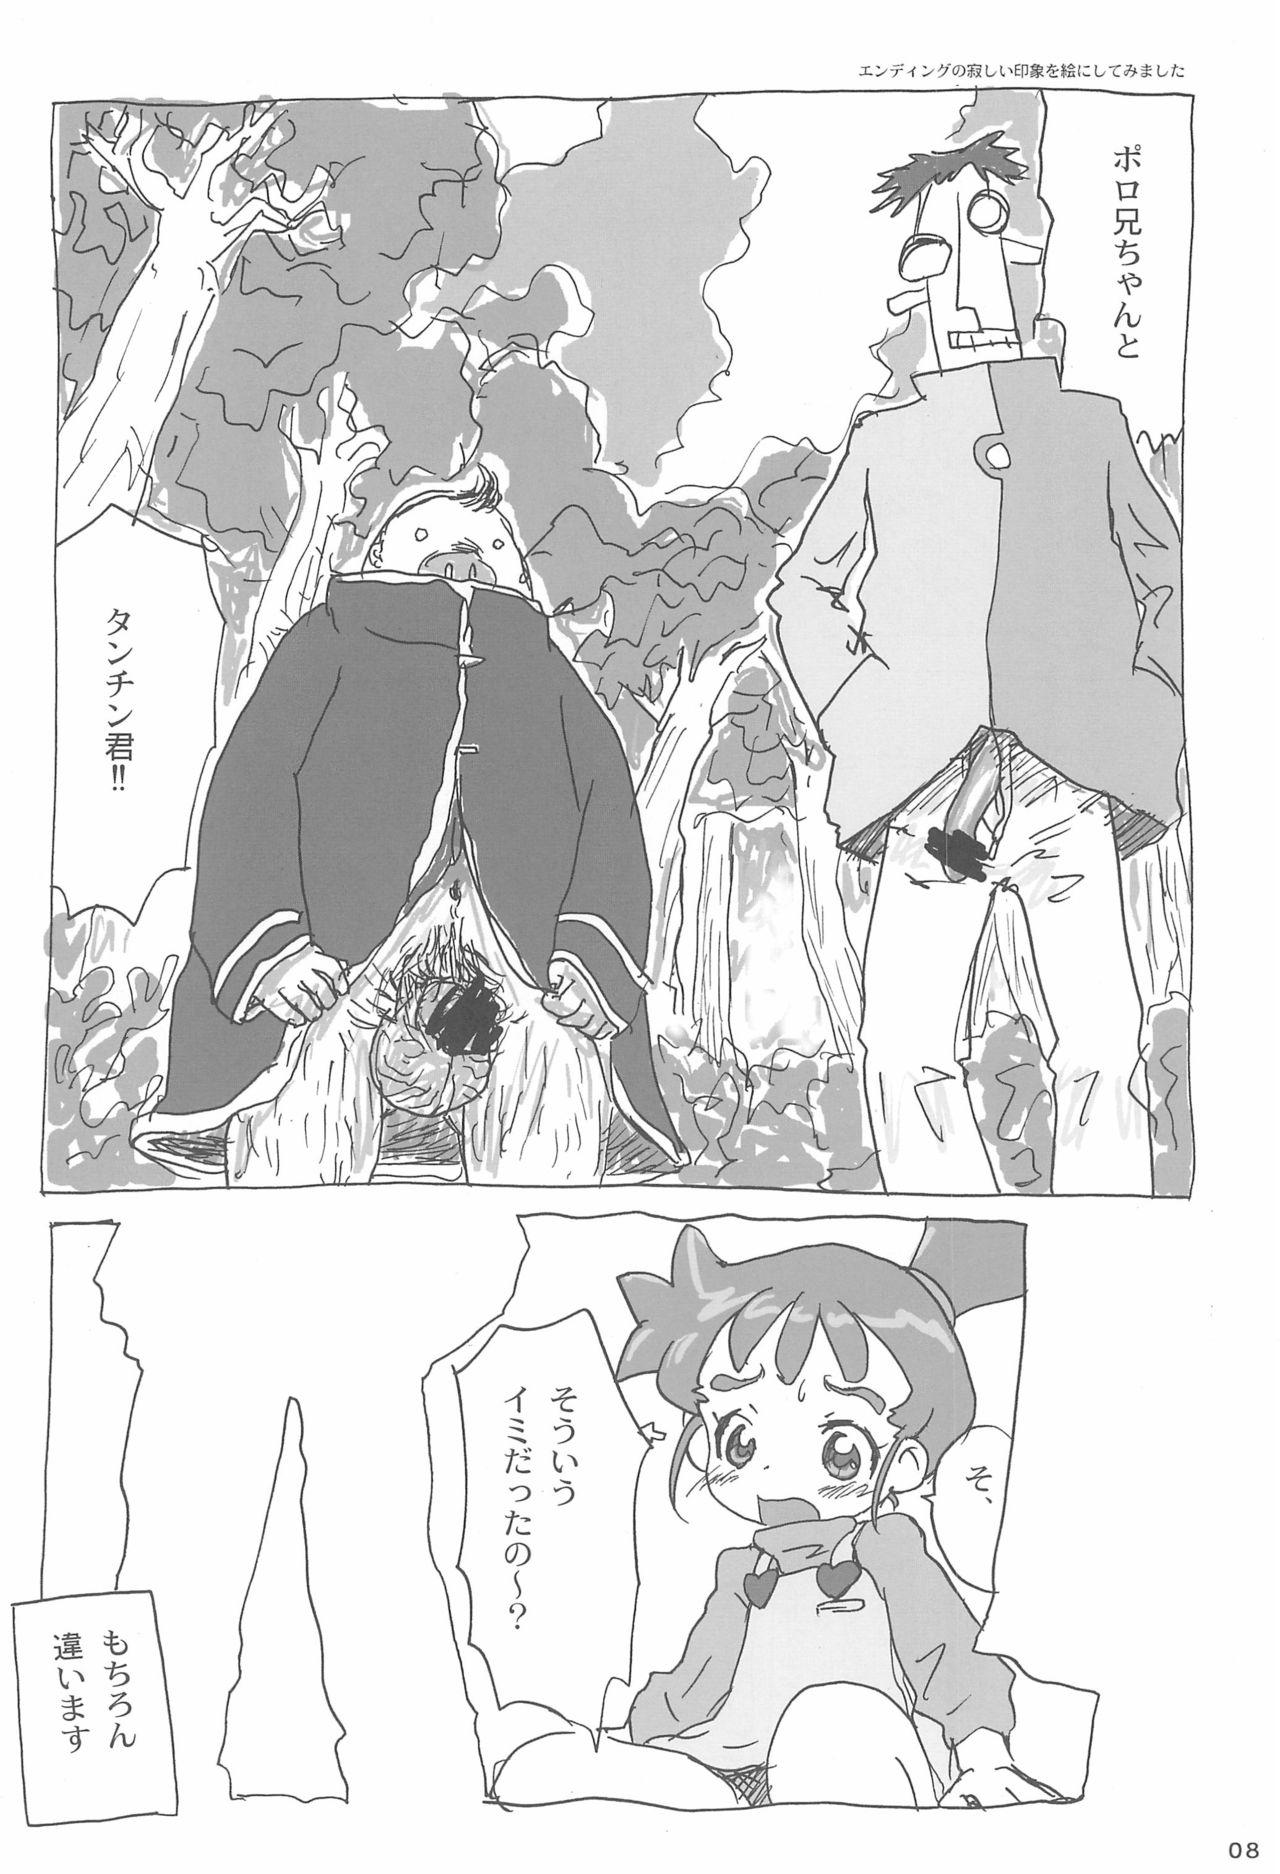 Chacal Ana no Hana - Kasumin Trimmed - Page 10